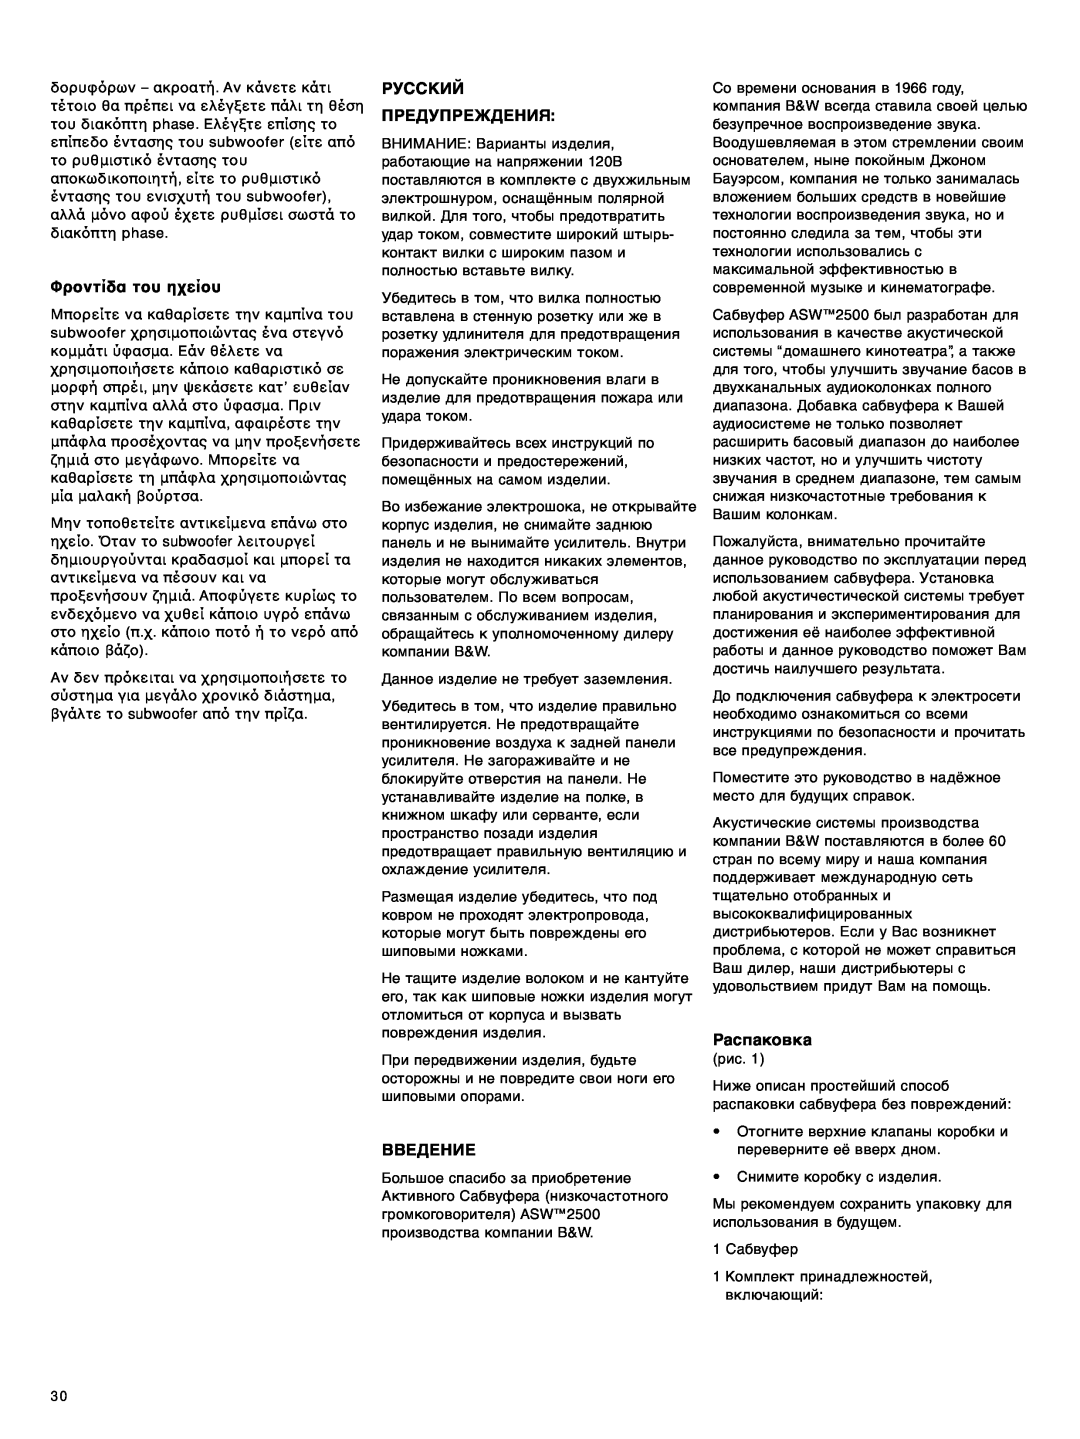 Bowers & Wilkins ASW 2500 owner manual Φρτη, Русский Предупреждения, Вbедение, Распаковка 